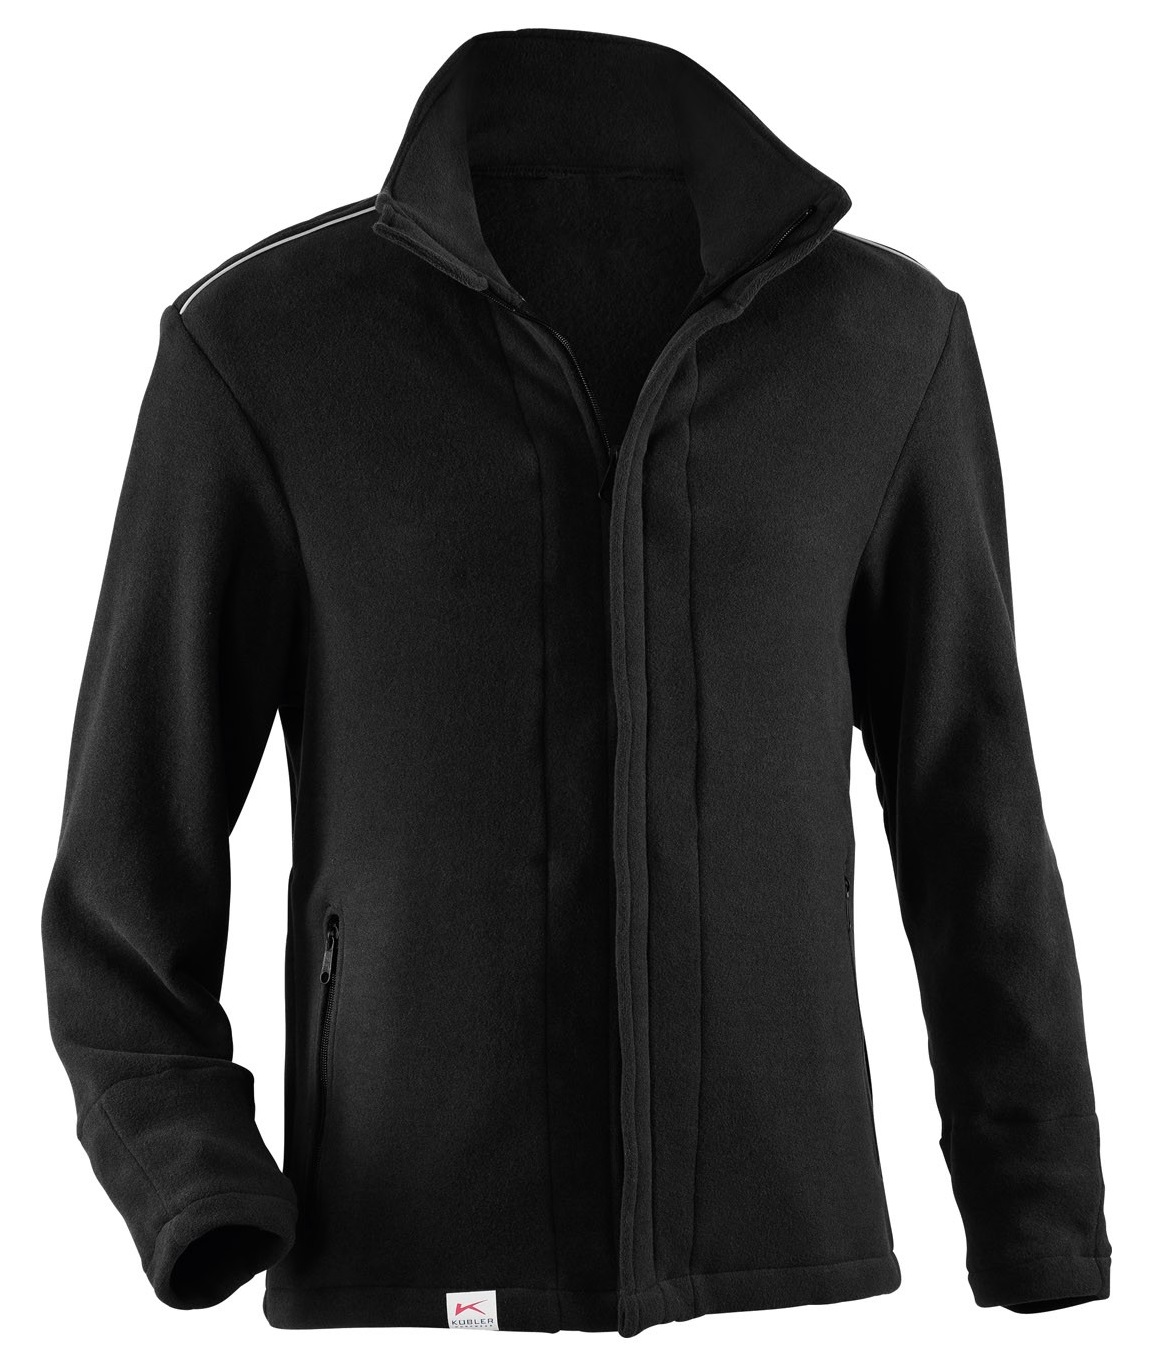 KÜBLER-Kälteschutz-PSA-Safety-X8-F-Fleece-Arbeits-Berufs-Jacke, ca. 360g/m², schwarz